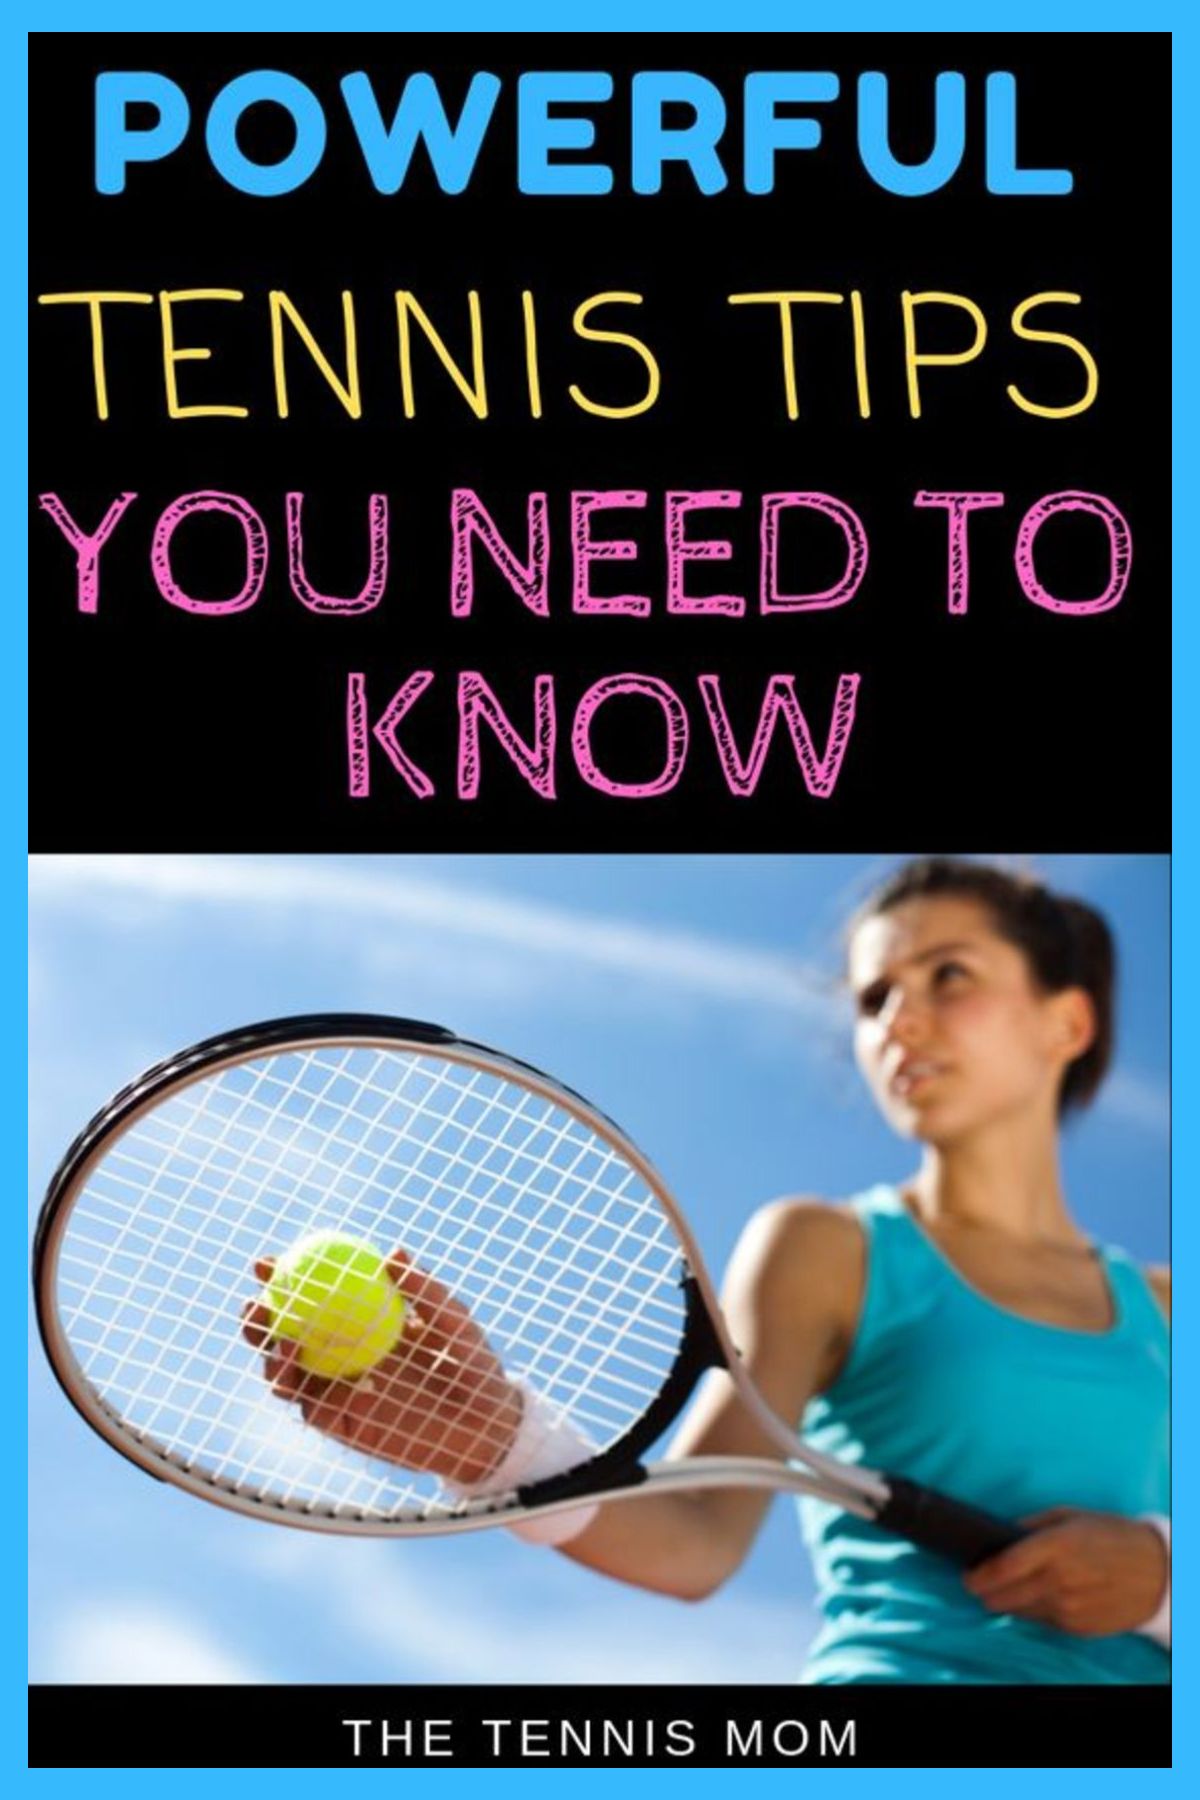 Pin on Tennis tips